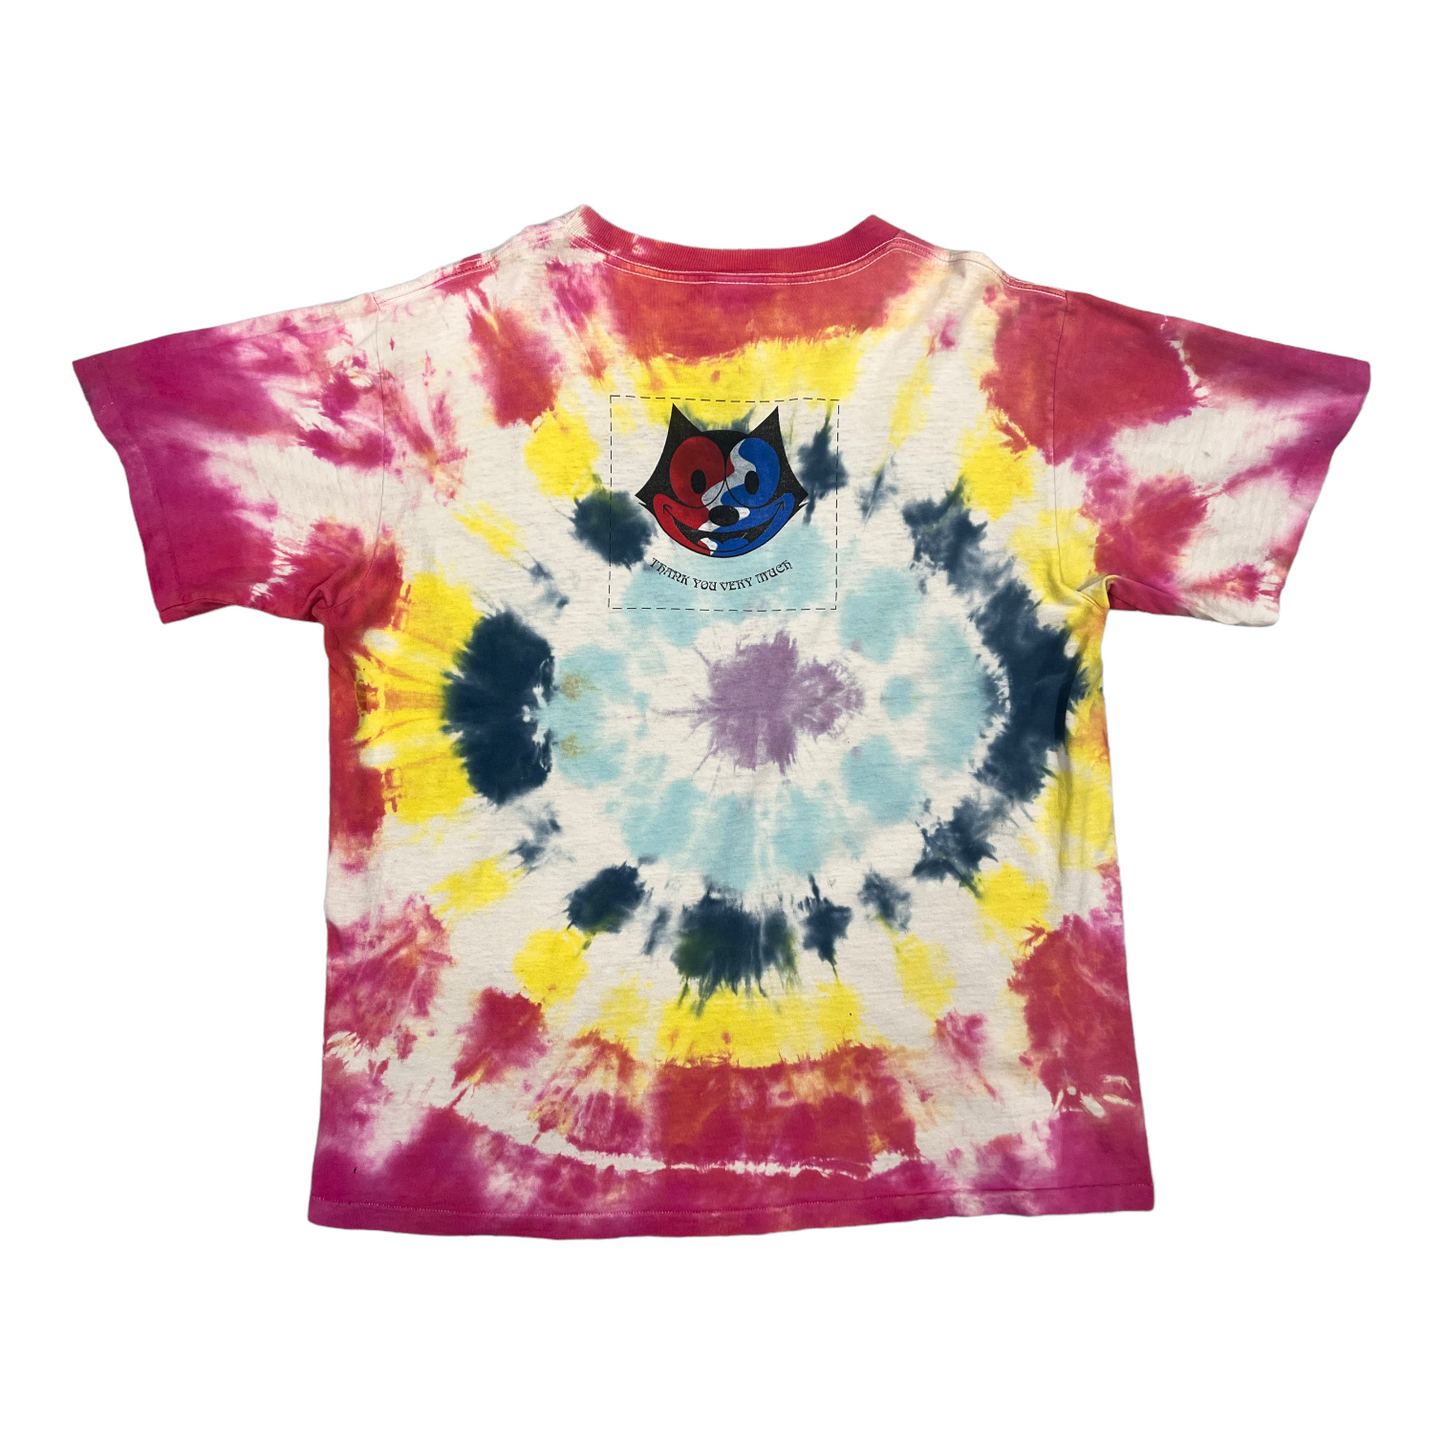 1990’s Grateful Felix tye dye Parody shirt